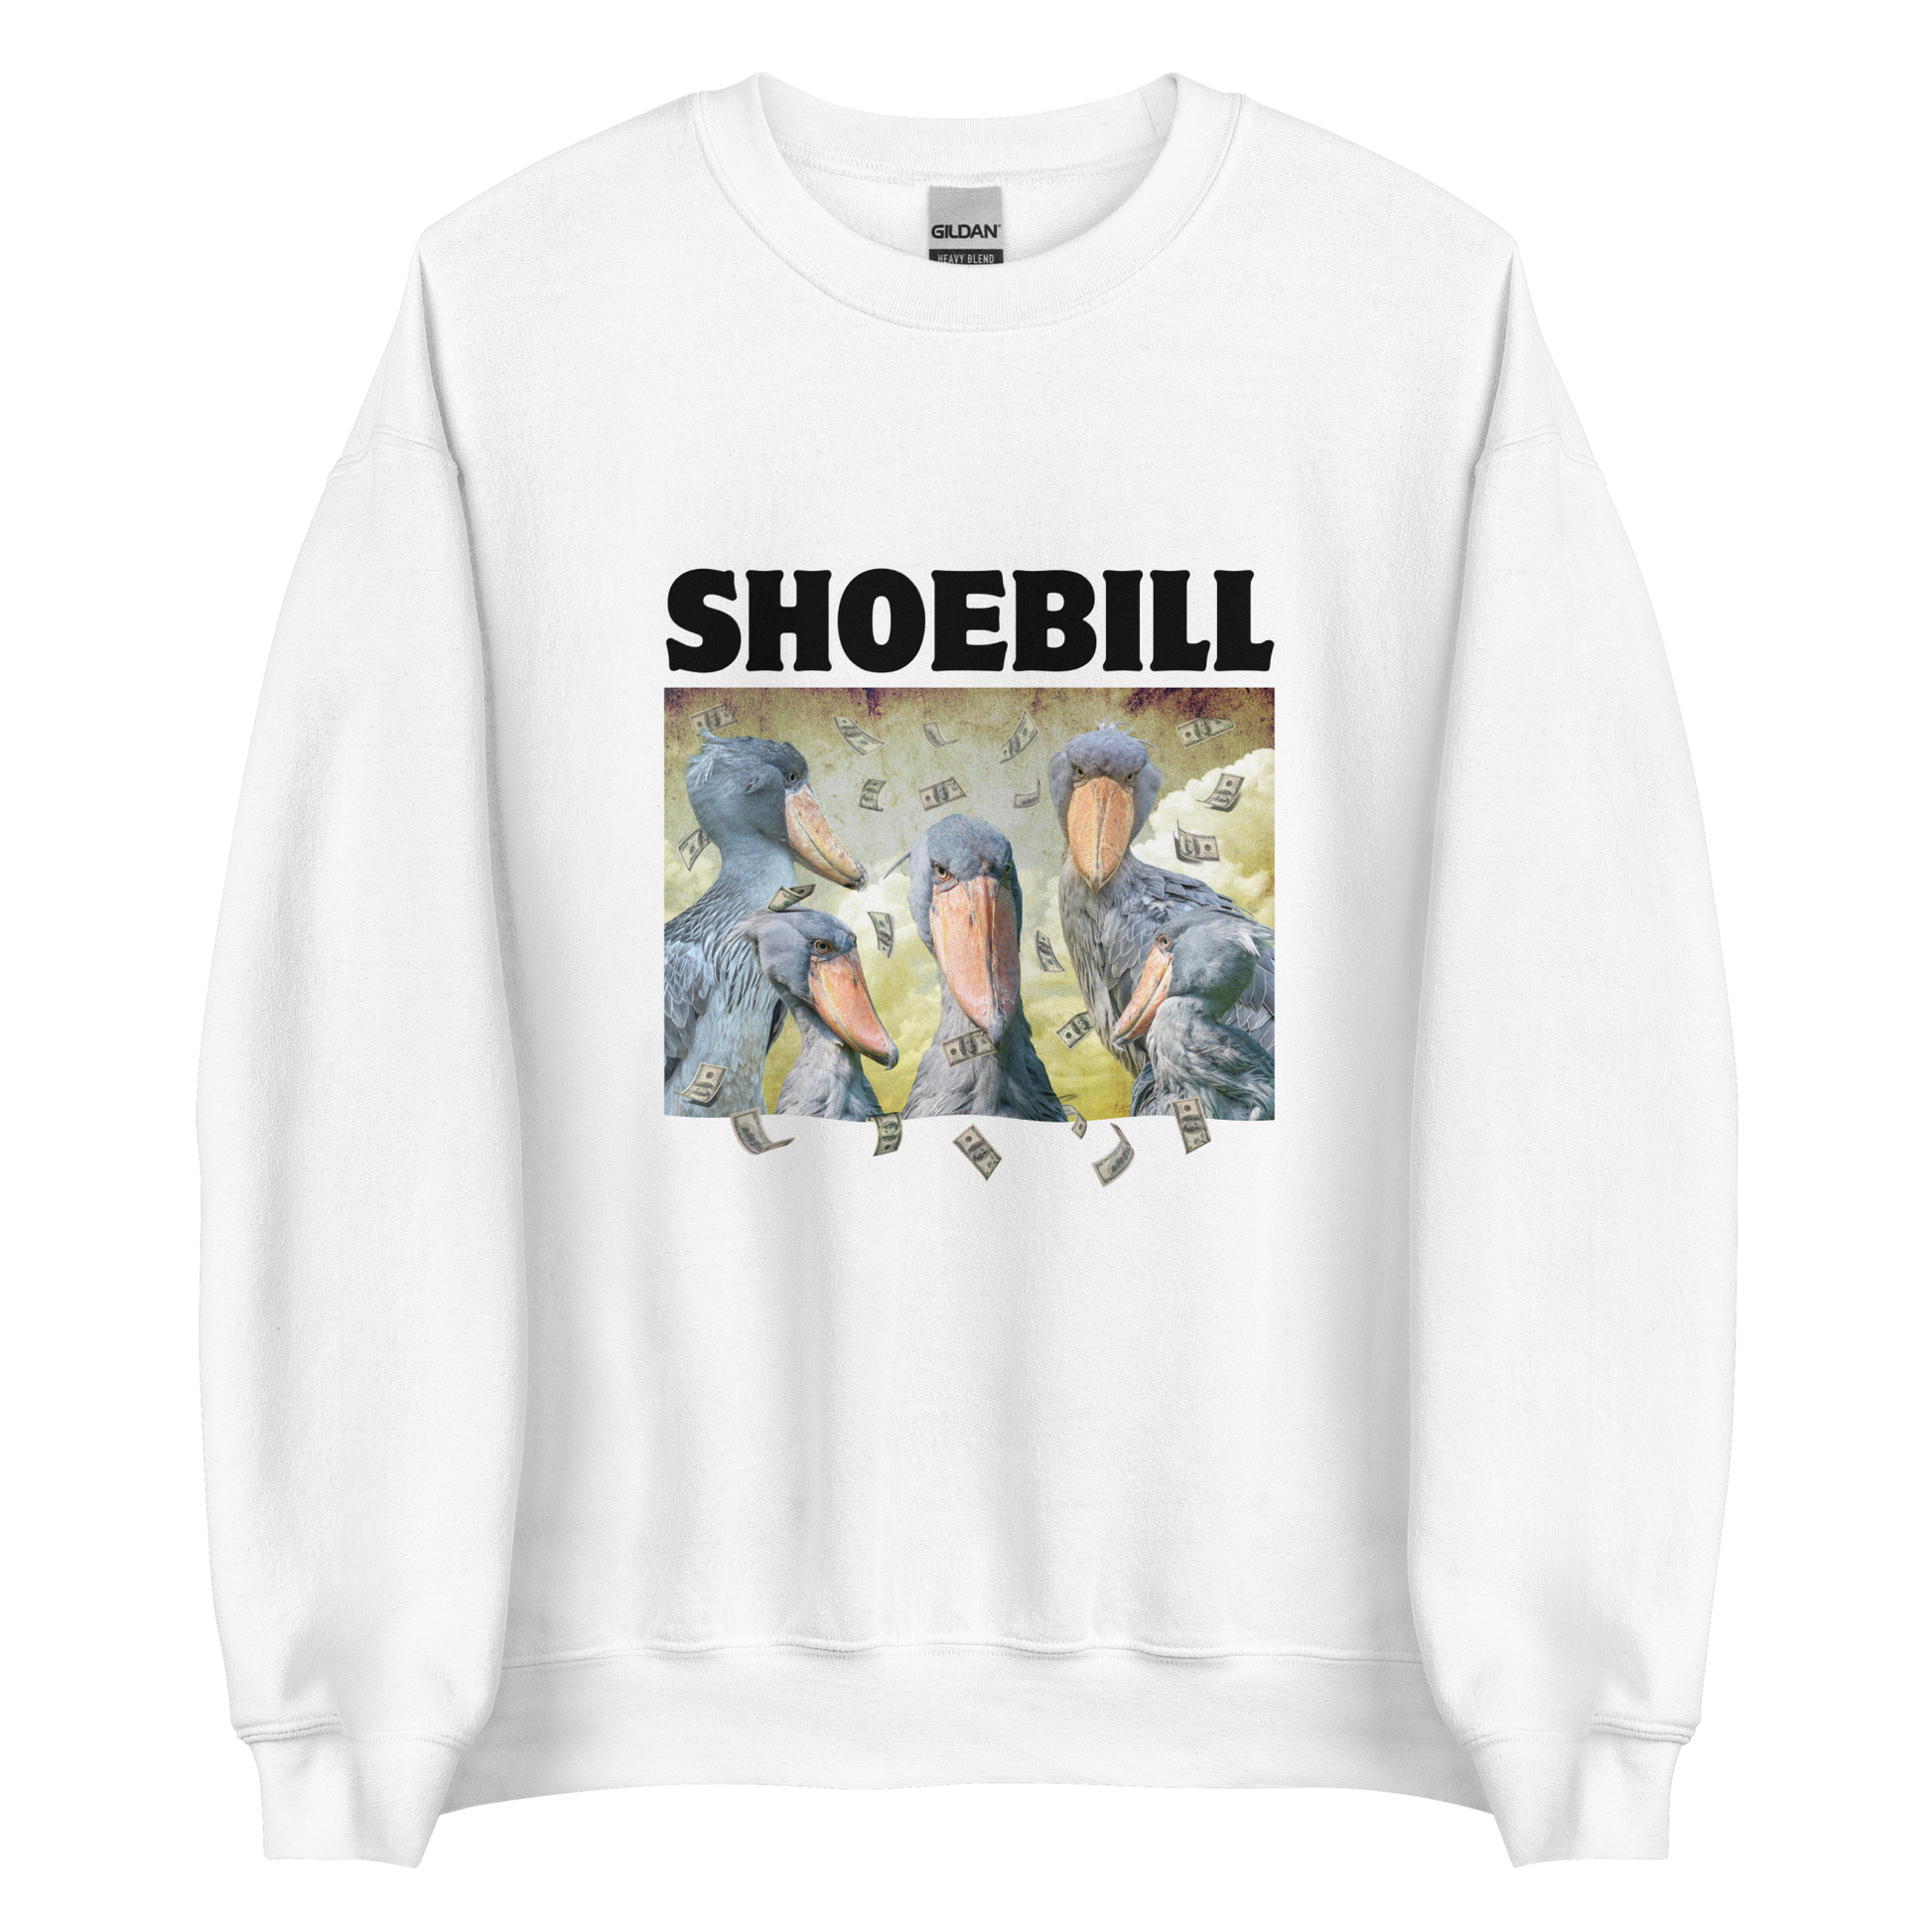 White Shoebill Sweatshirt featuring a cool Shoebill graphic on the chest - Artsy/Funny Graphic Shoebill Stork Sweatshirts - Boozy Fox